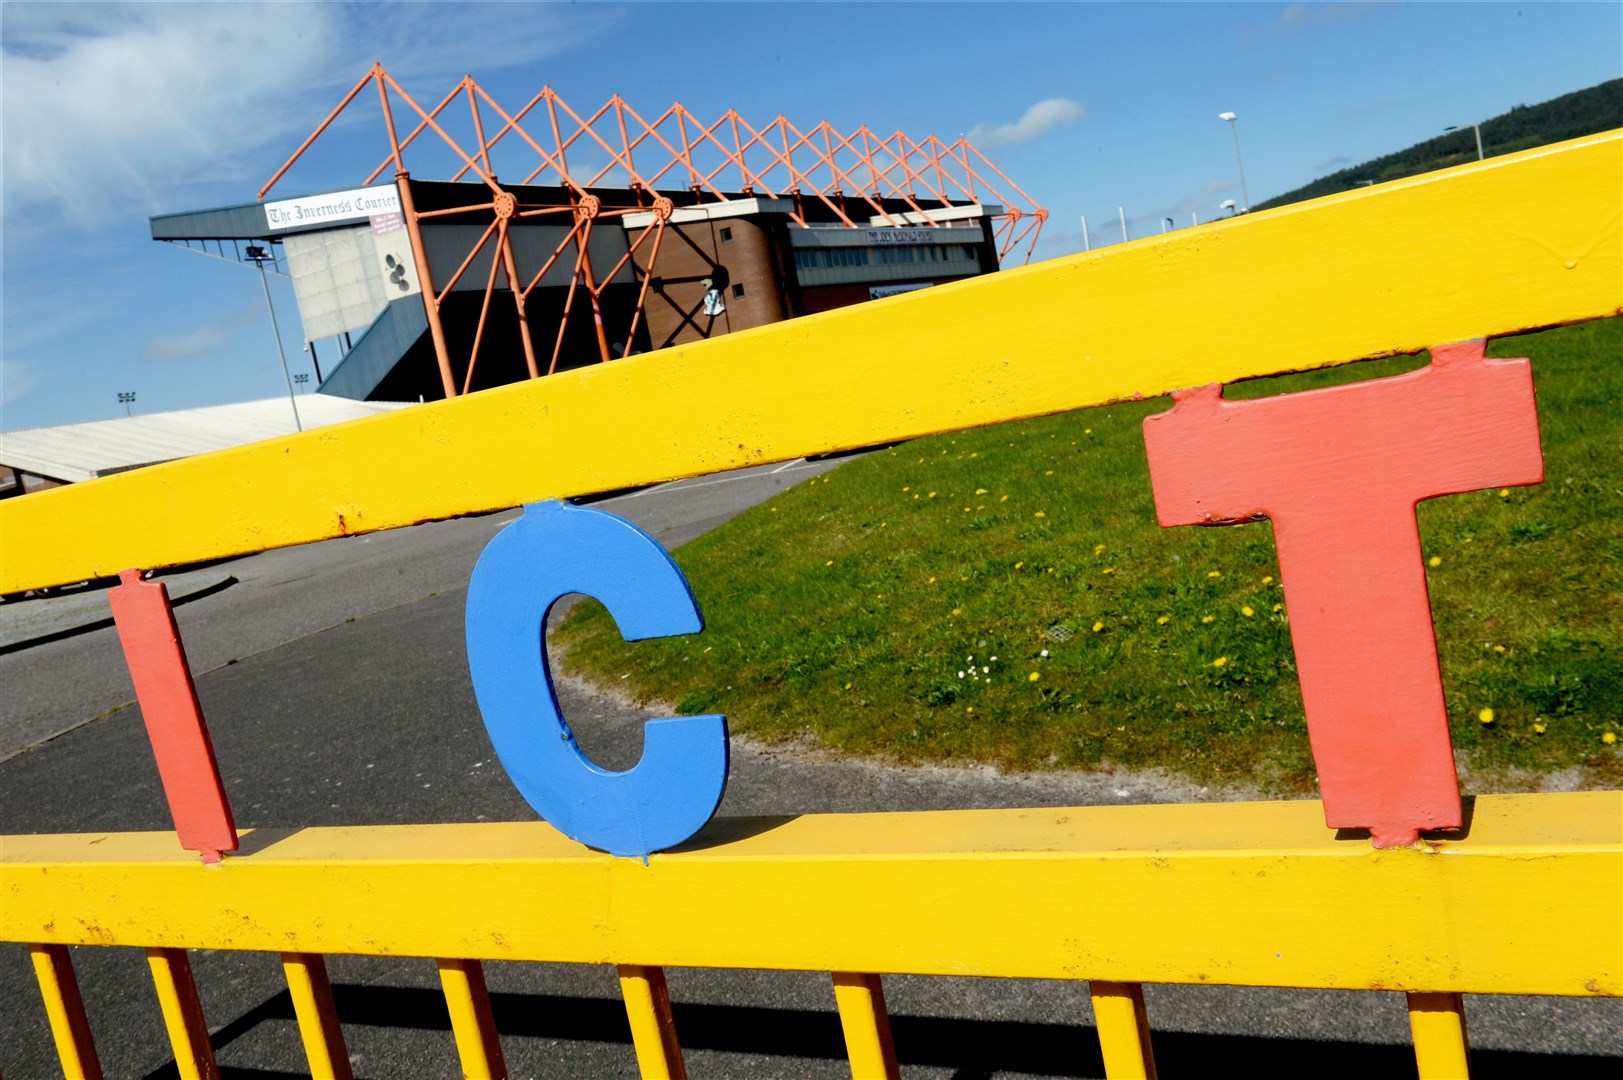 Tulloch Caledonian Stadium..Inverness Caledonian Thistle stadium locator.Picture: Gair Fraser. Image No. ..